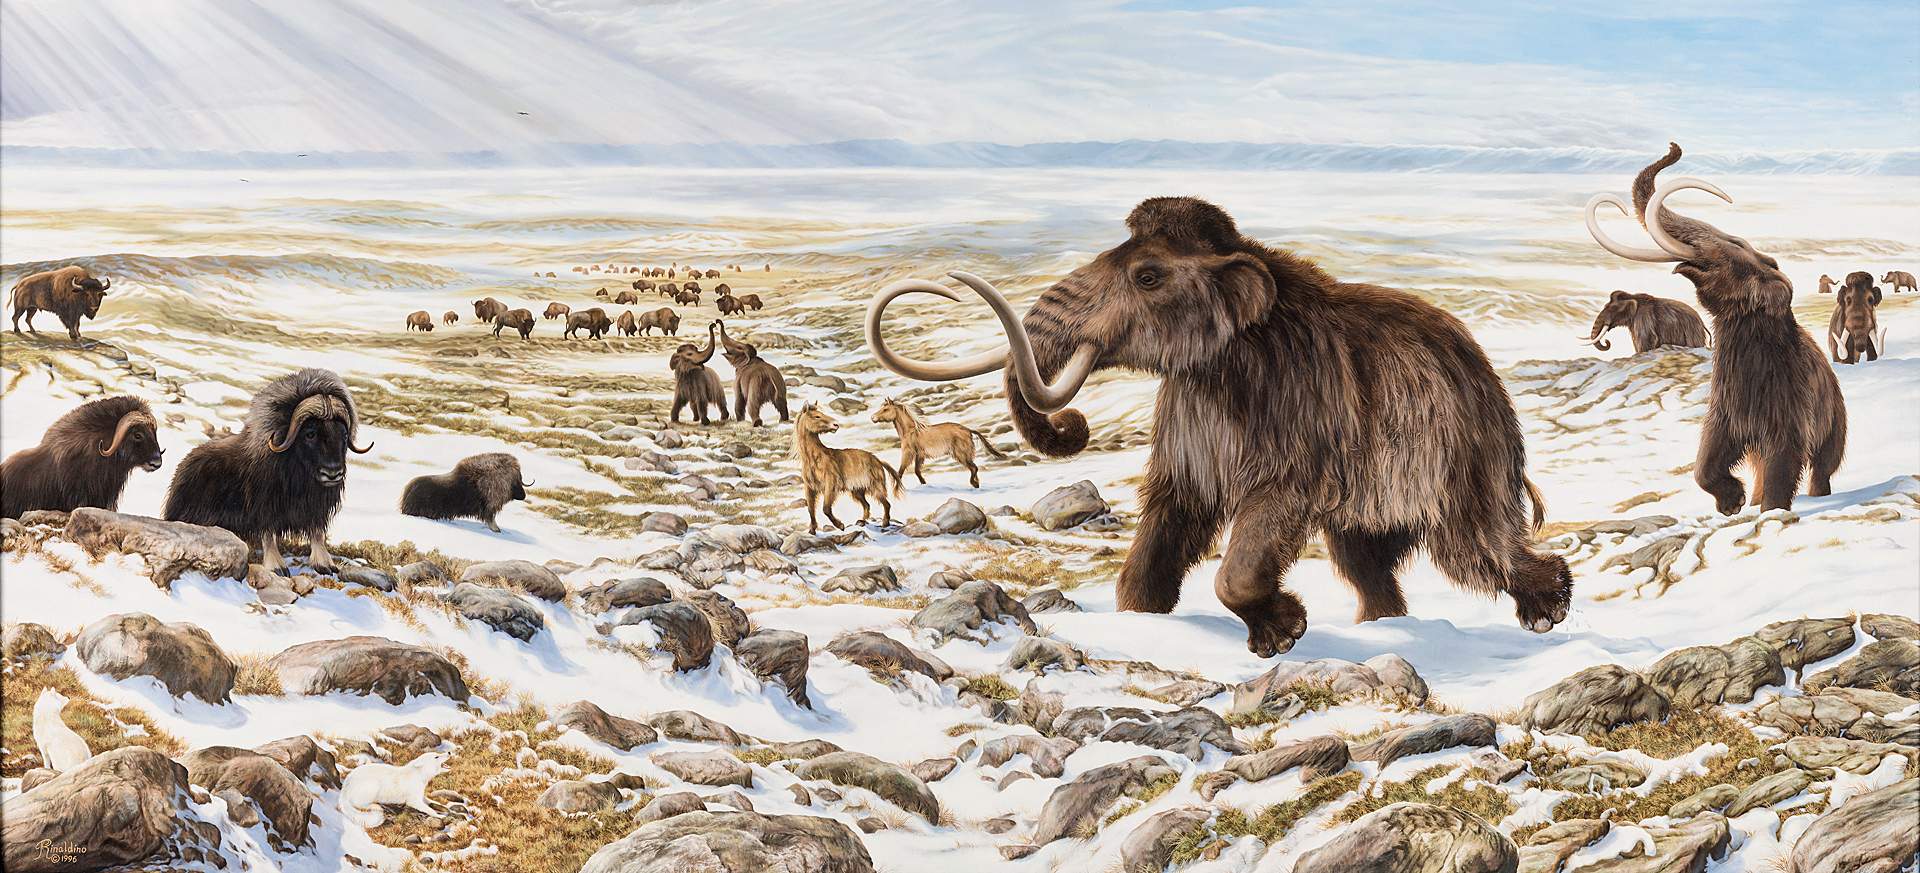 10-ice-age-animals-facts